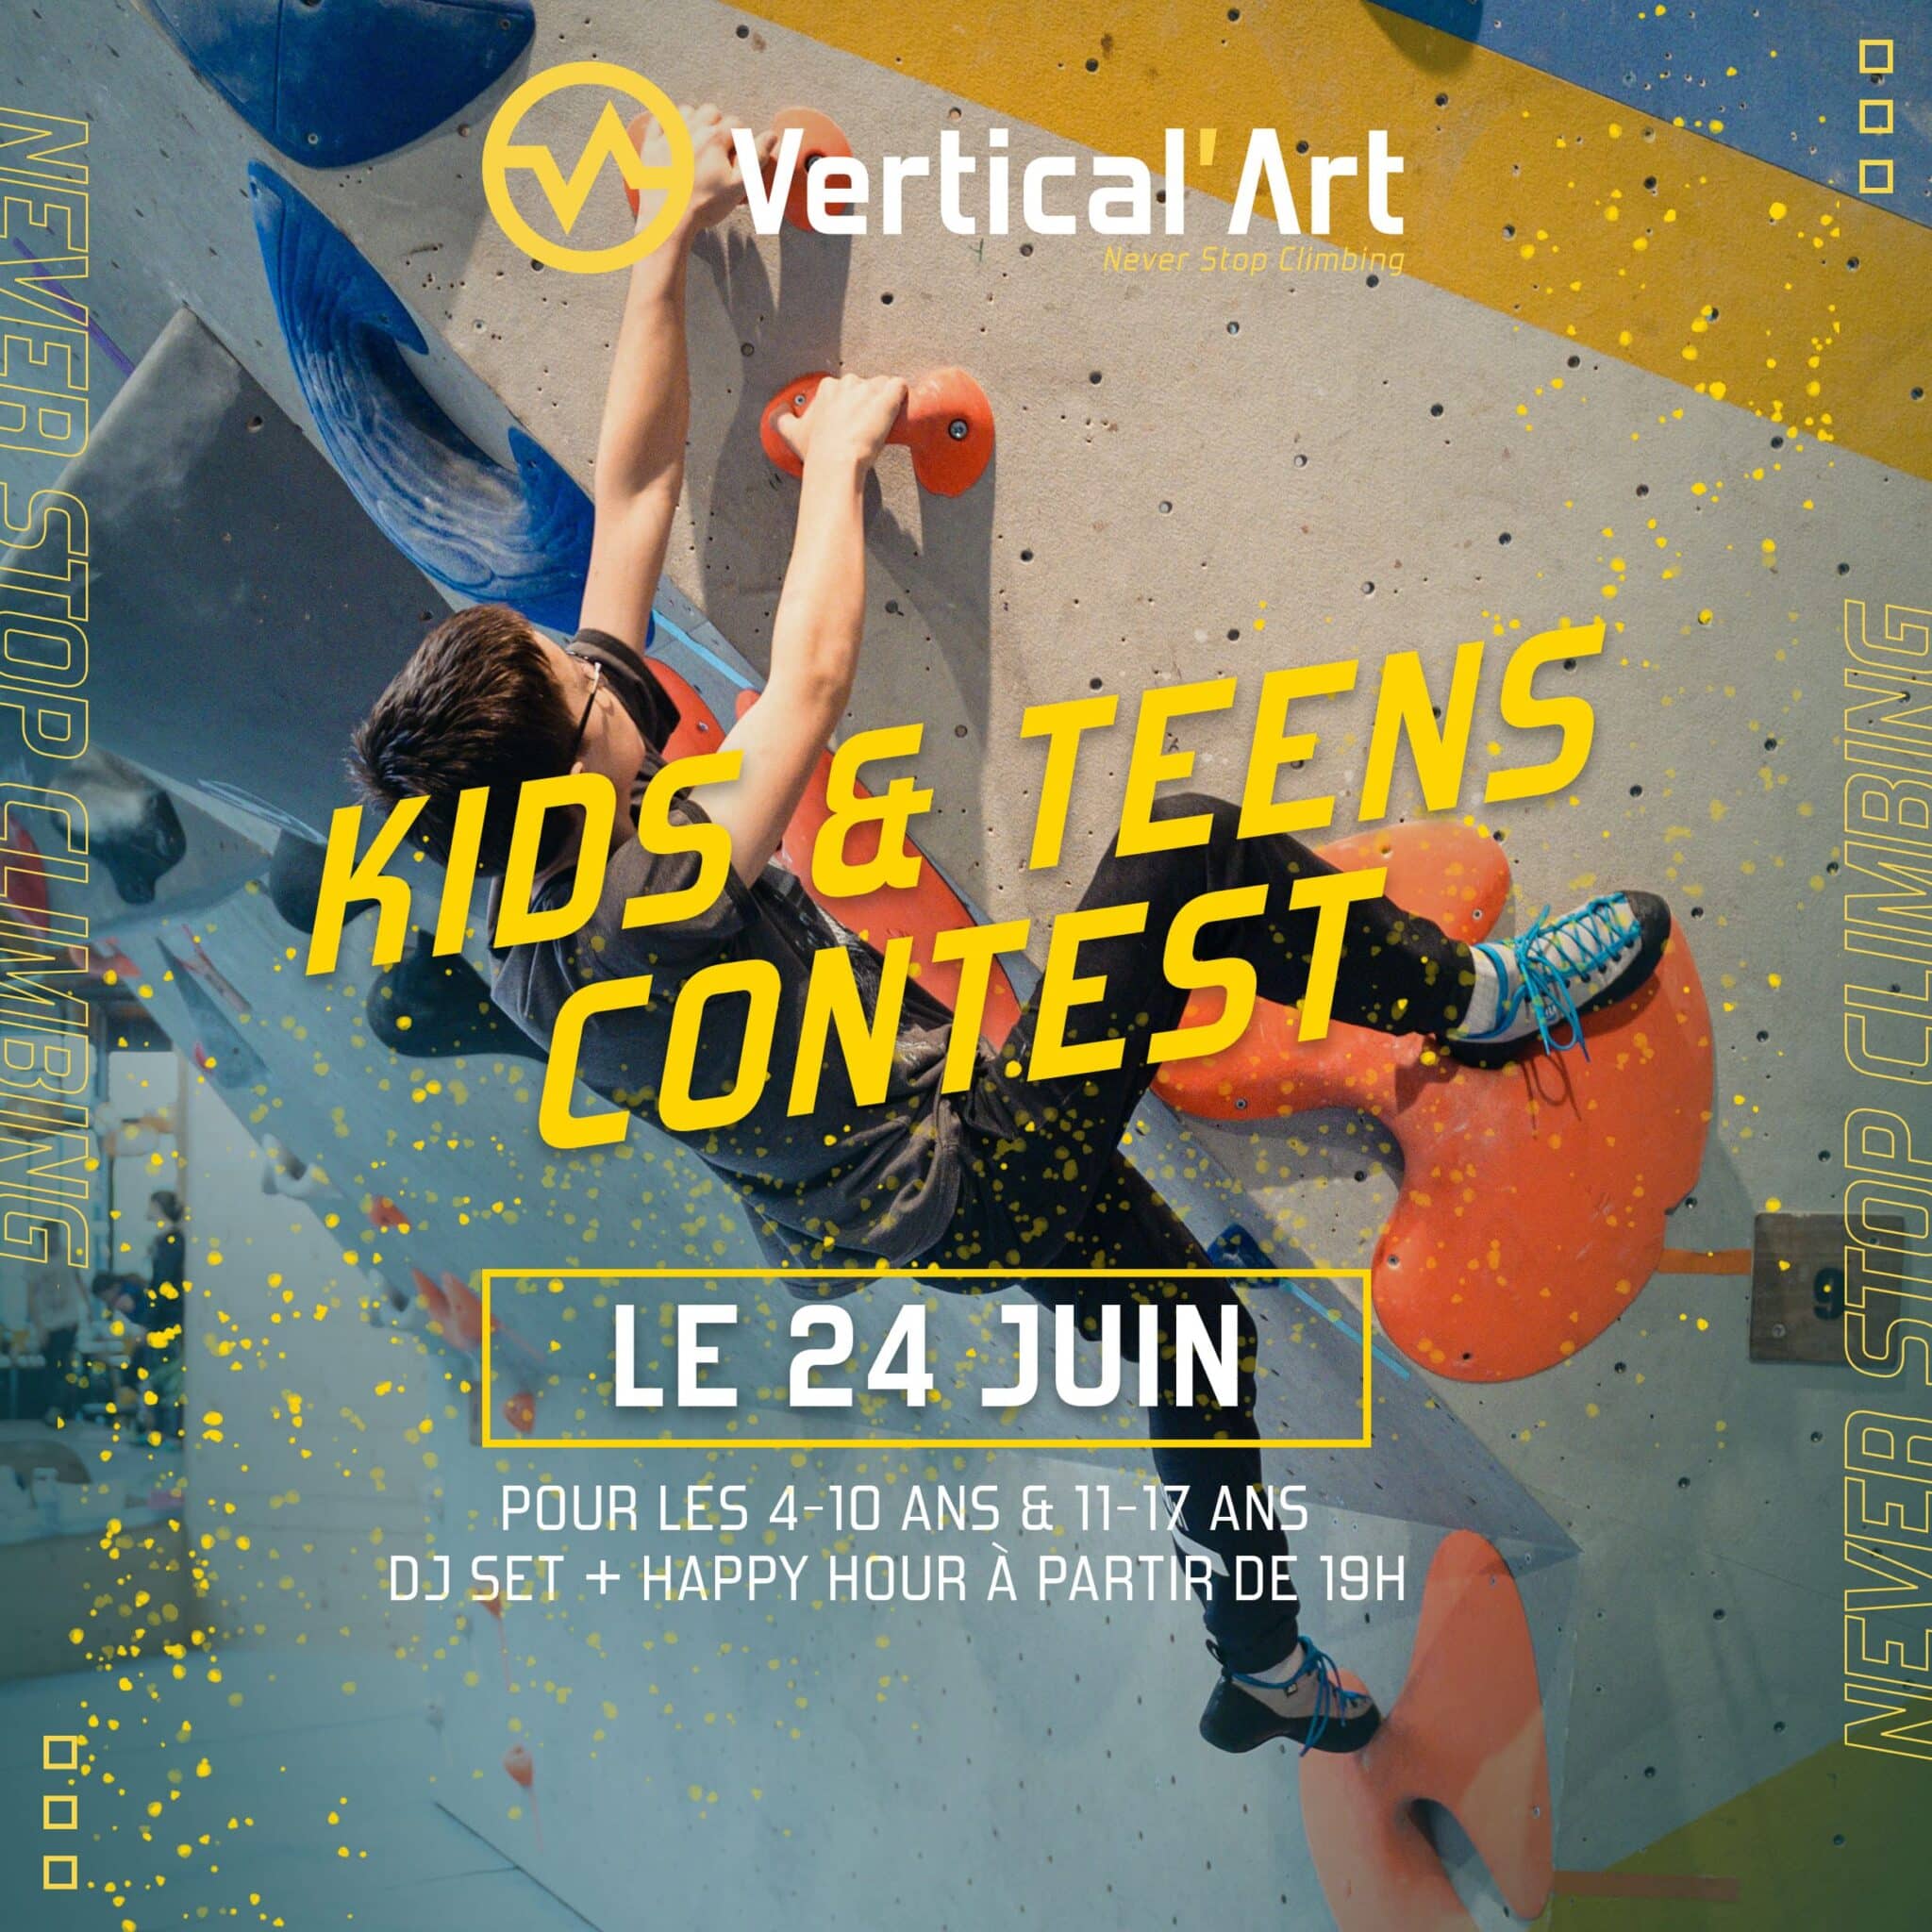 Contest Kids & teens à Vertical'Art Le Mans samedi 24 juin